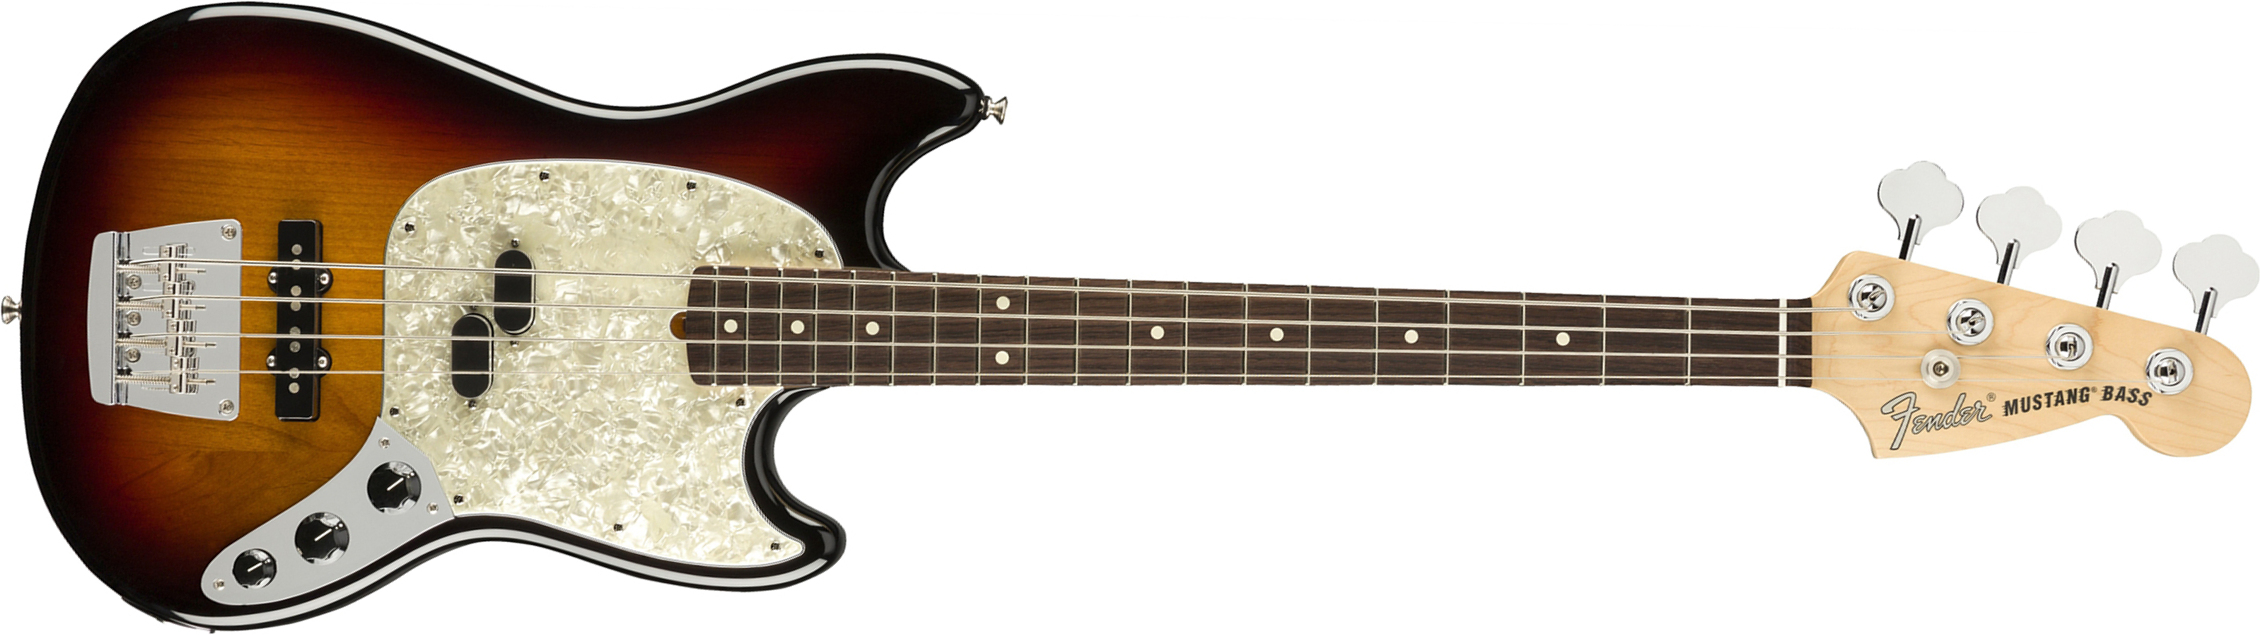 Fender Mustang Bass American Performer Usa Rw - 3-color Sunburst - Short scale elektrische bas - Main picture